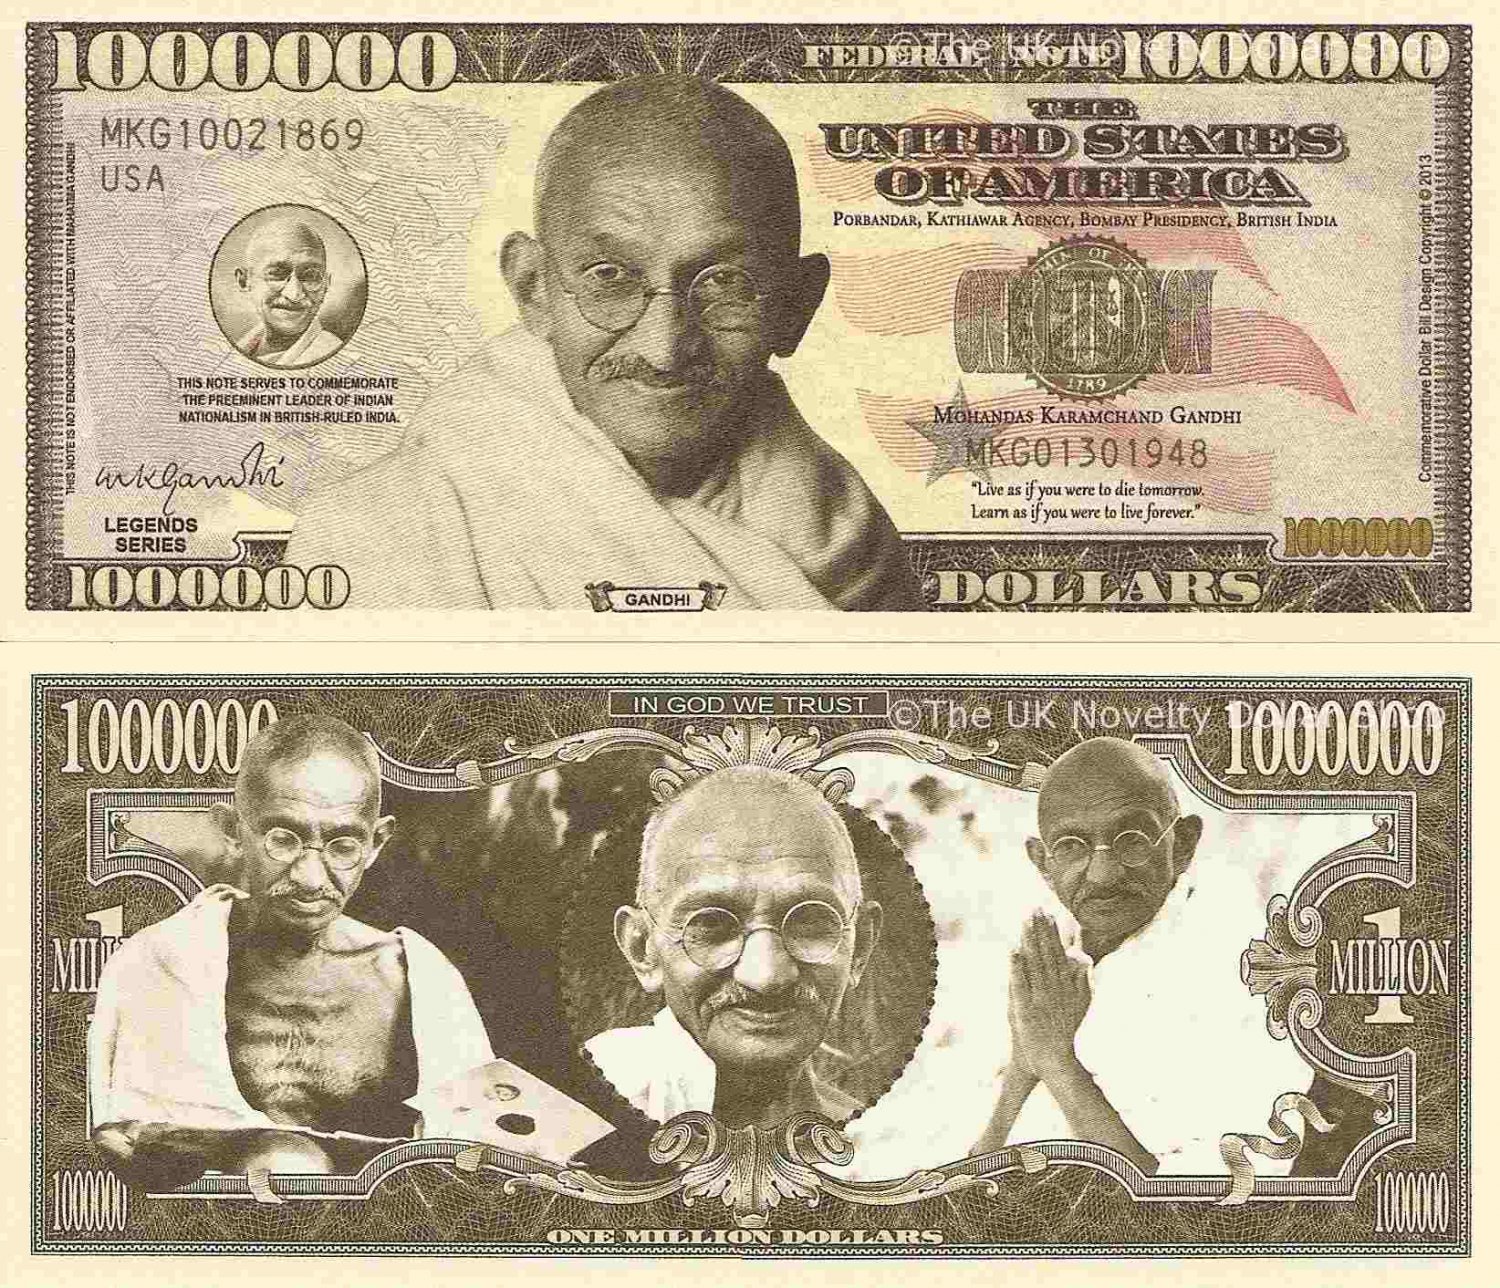 Mohandas Karamchand Gandhi Commemorative Million Dollar Bills x 2 India